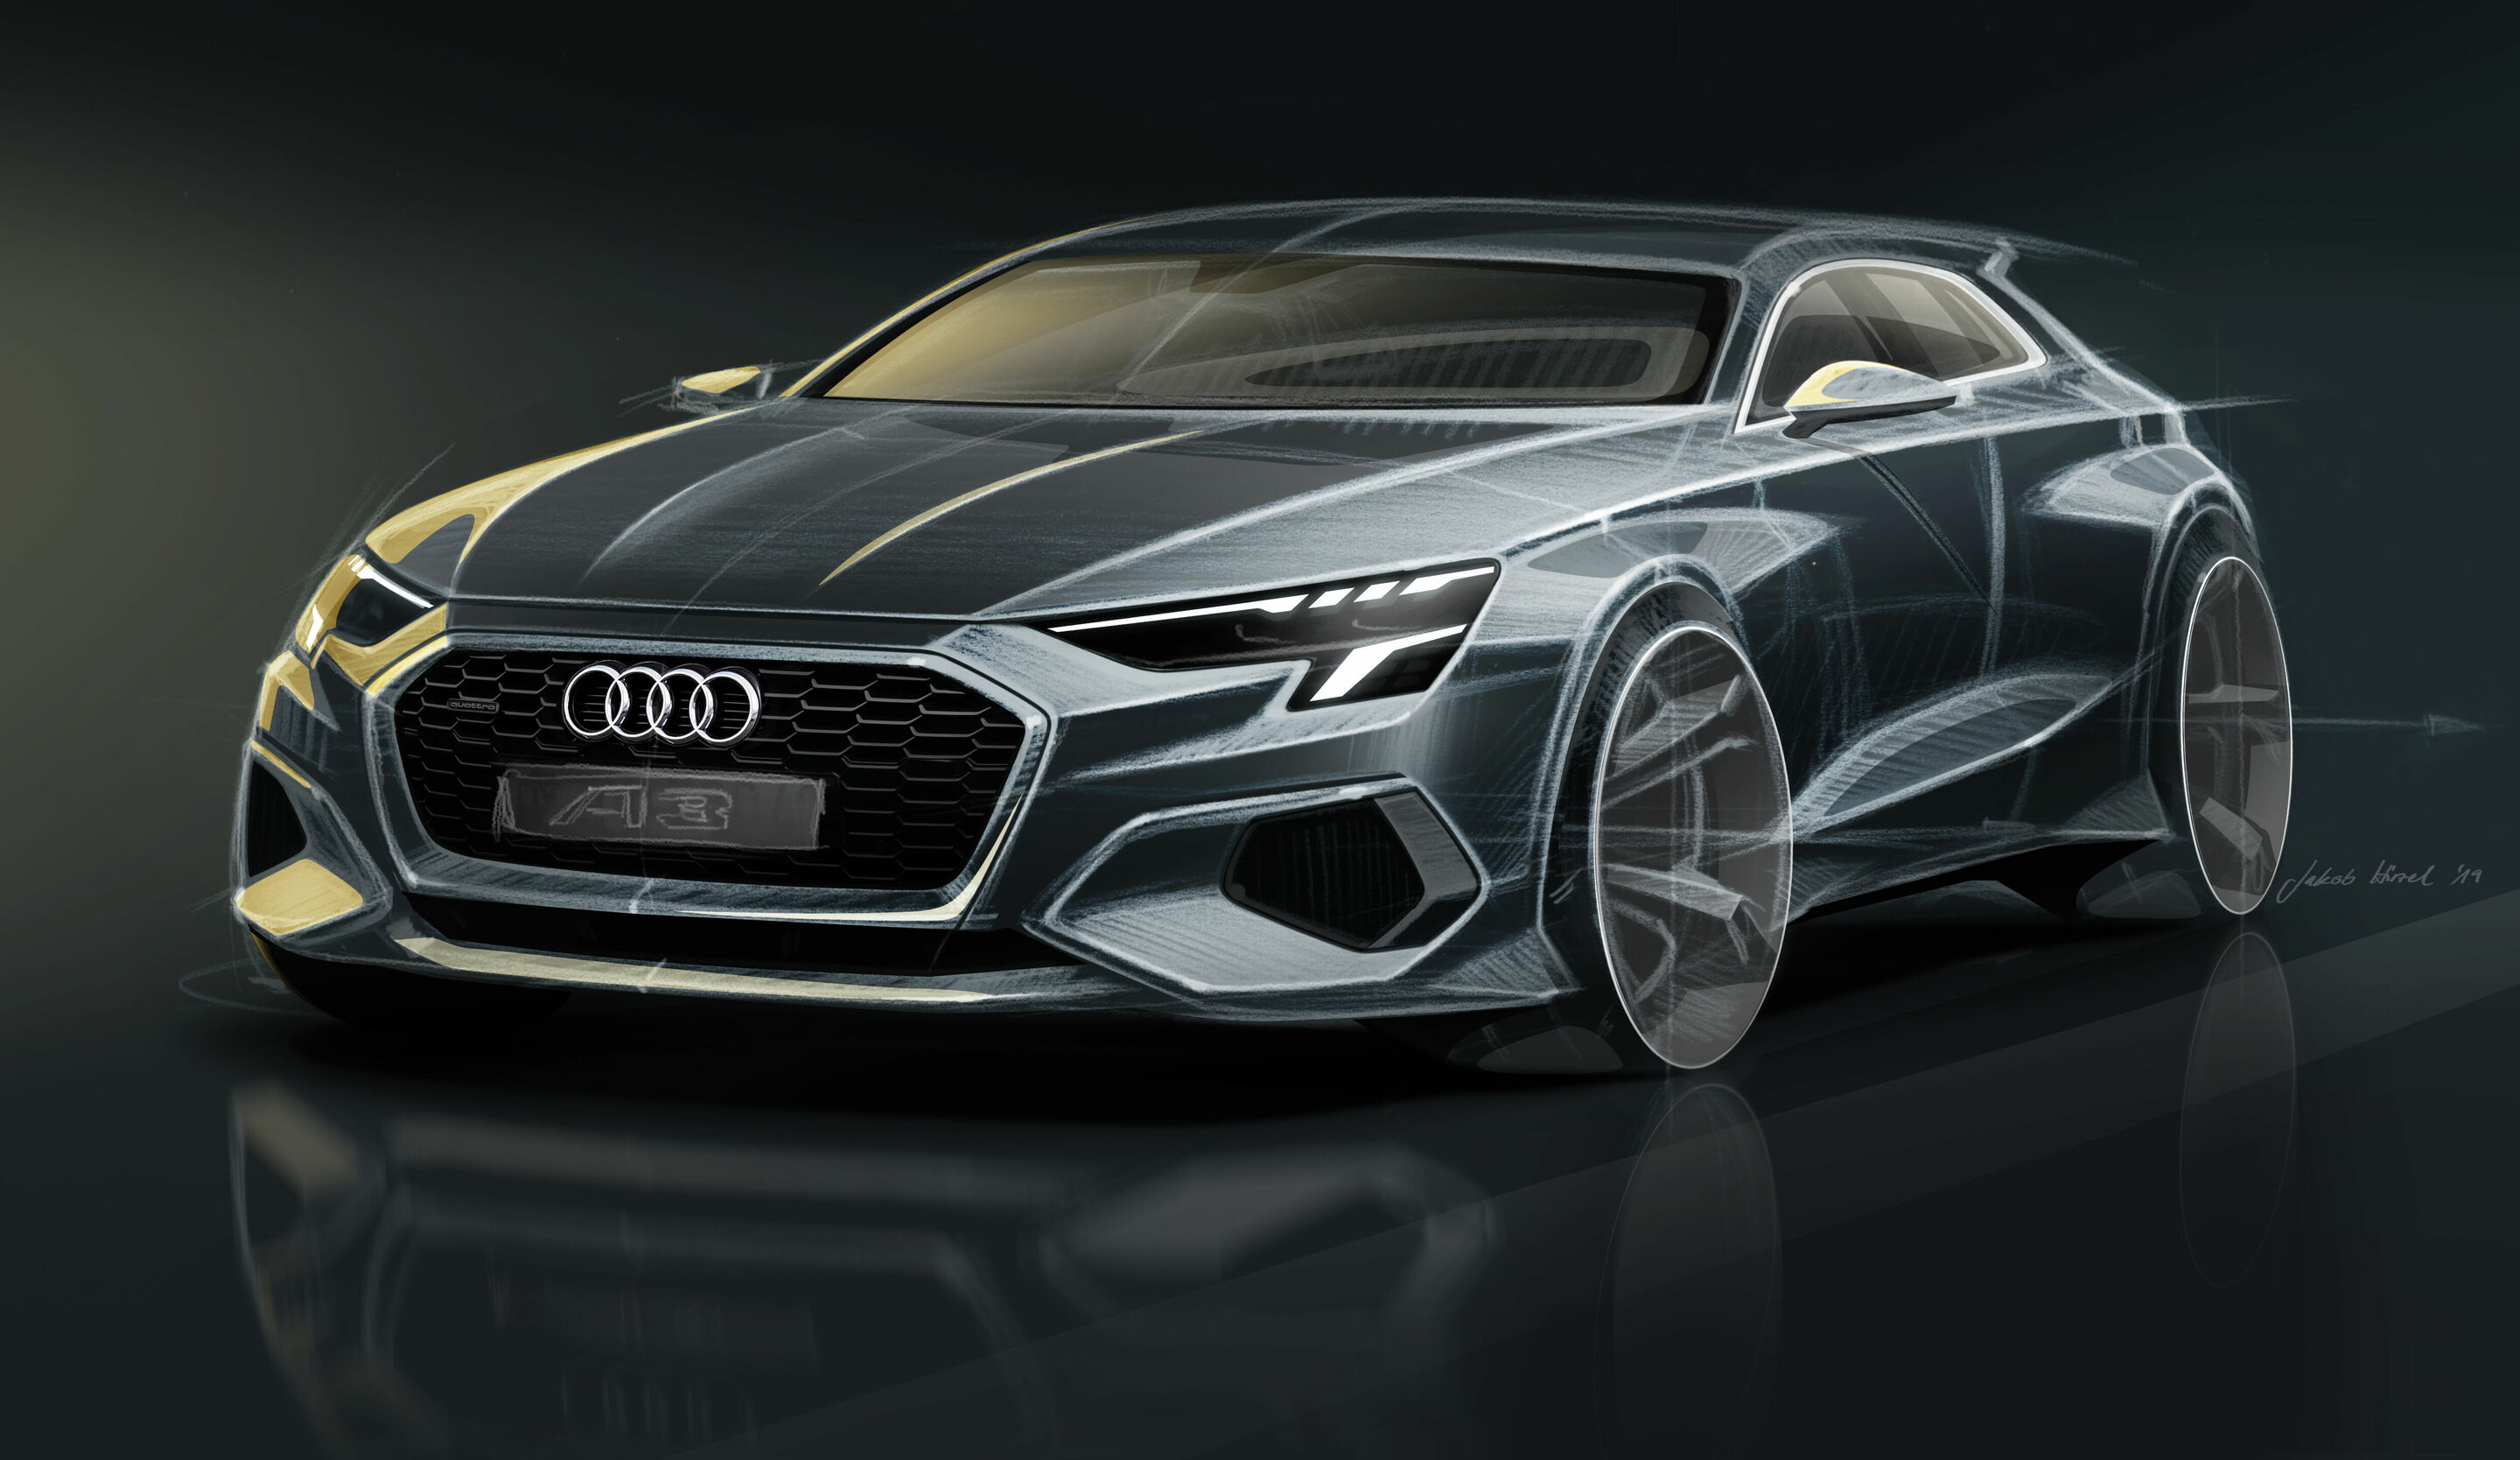 Tour the design laboratory of Audi online with “Insight Audi Design” Audi MediaCenter